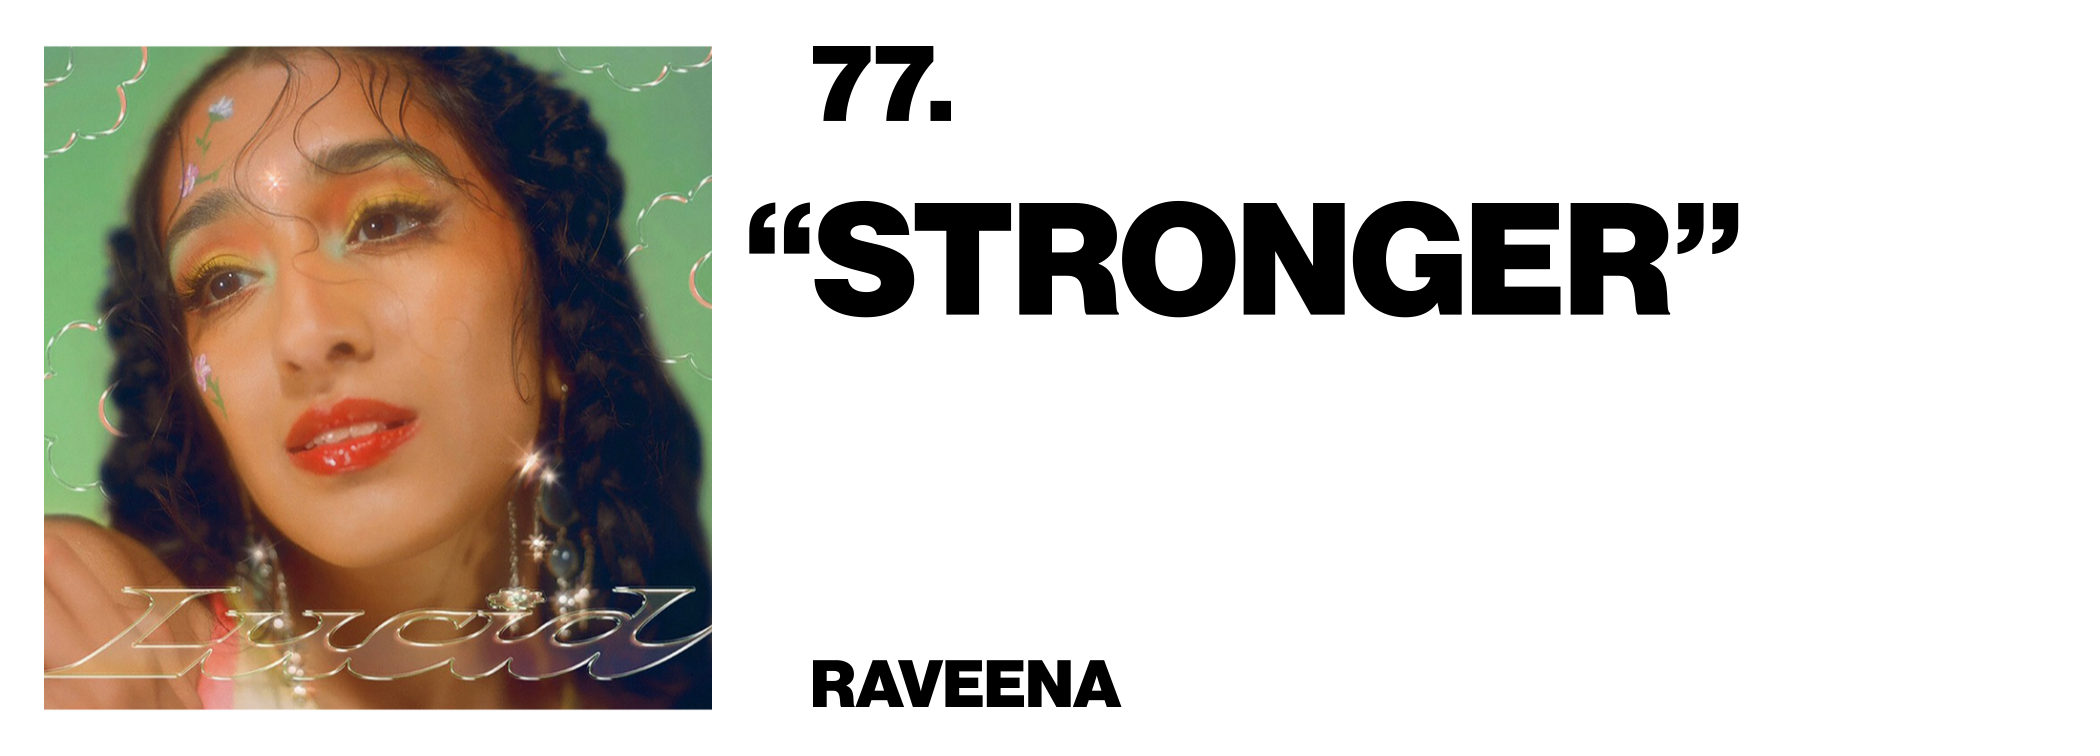 1576621551588-77-Raveena-_Stronger_